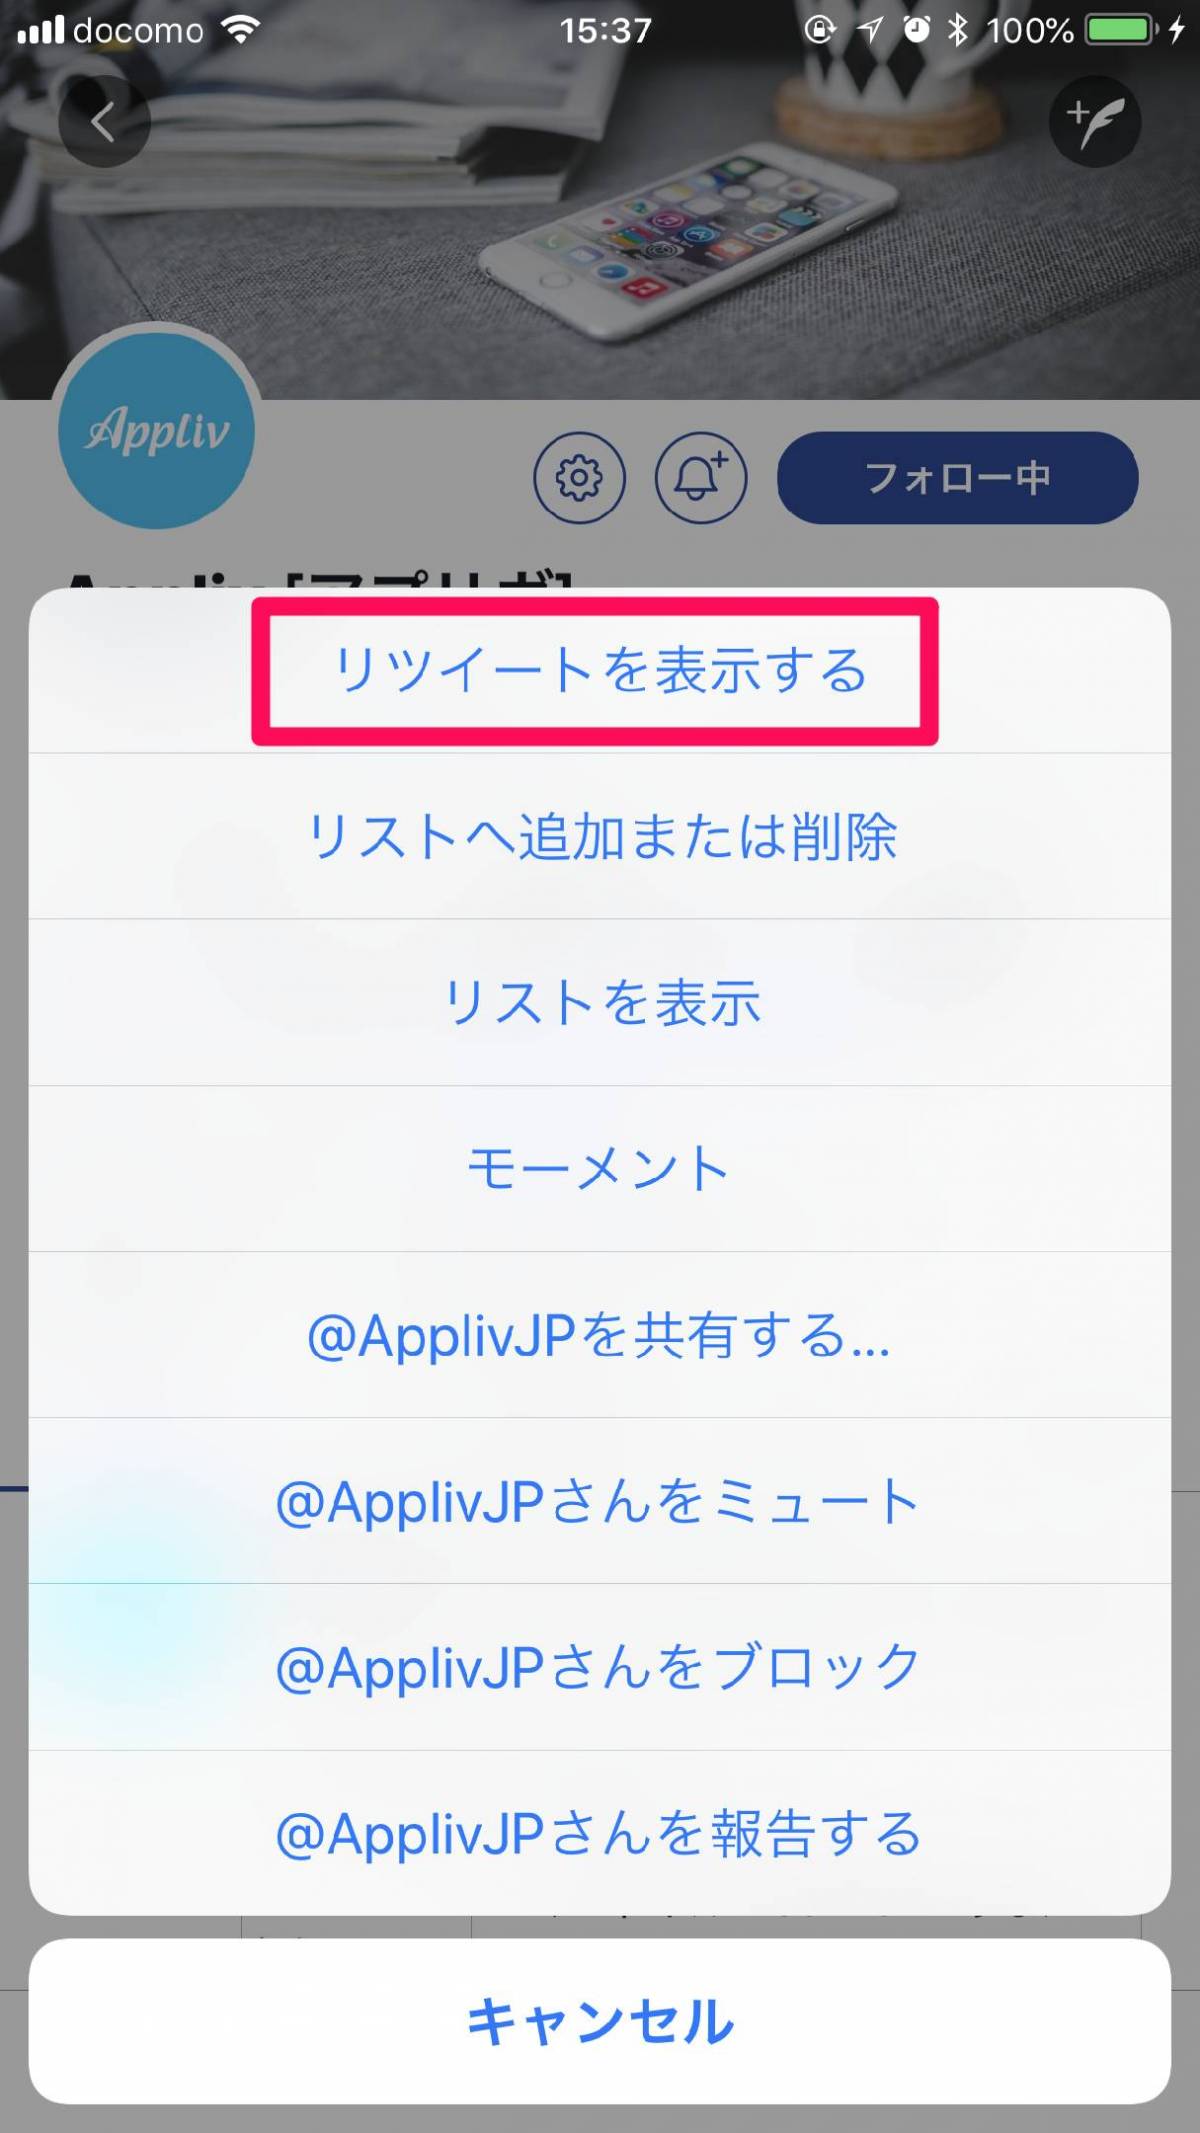 Twitter 特定ユーザーのリツイートを非表示にする方法 Iphone Android Pc Appliv Topics